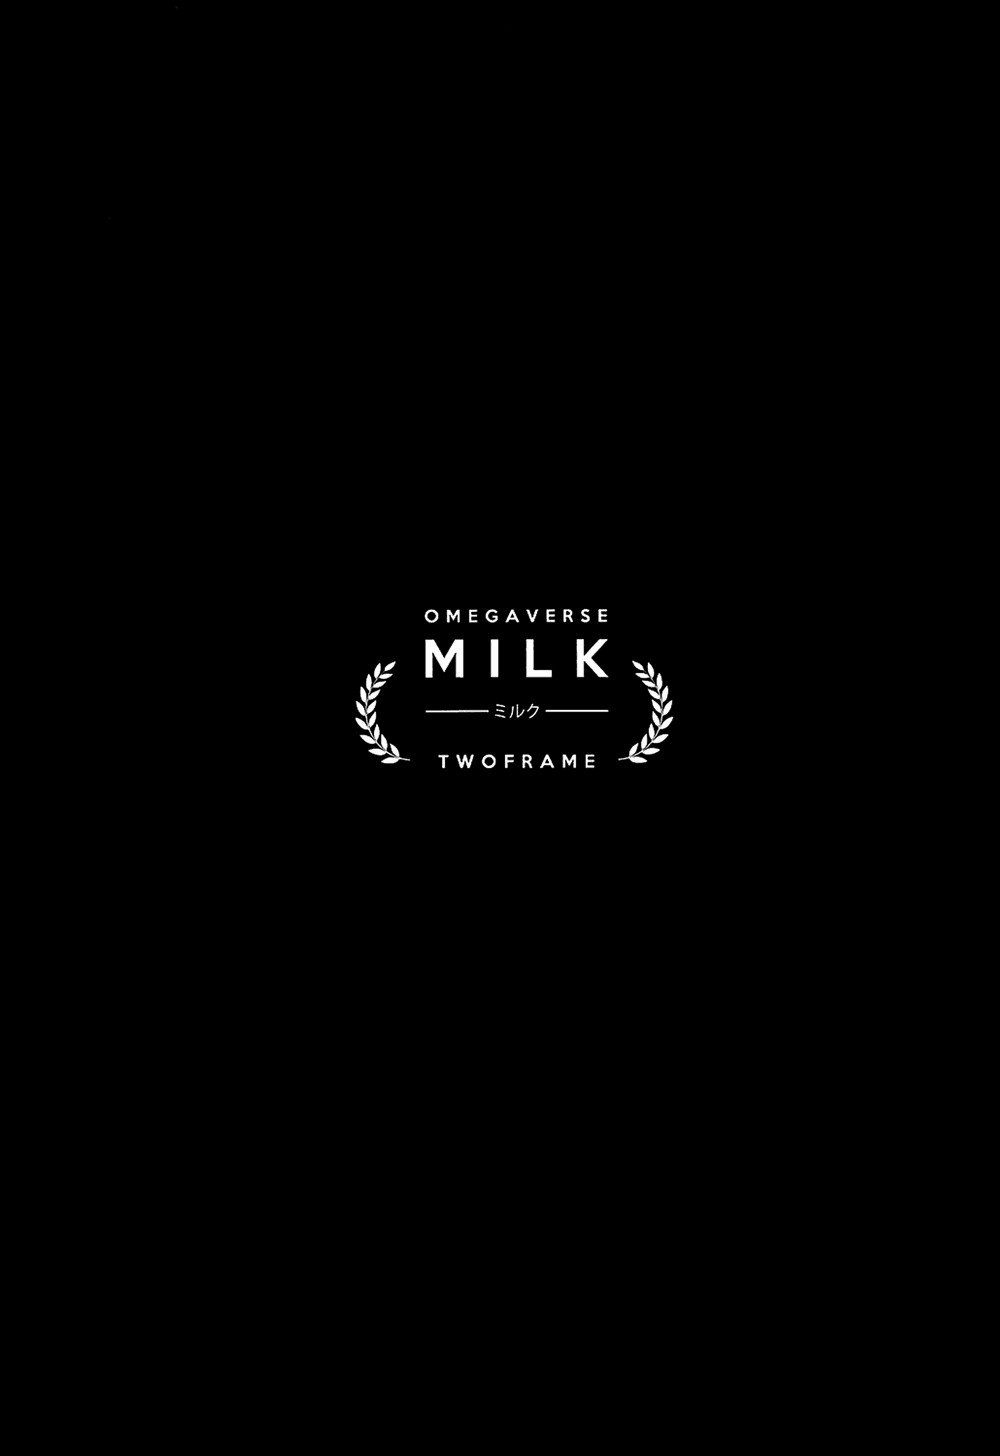 Omegaverse Milk 02